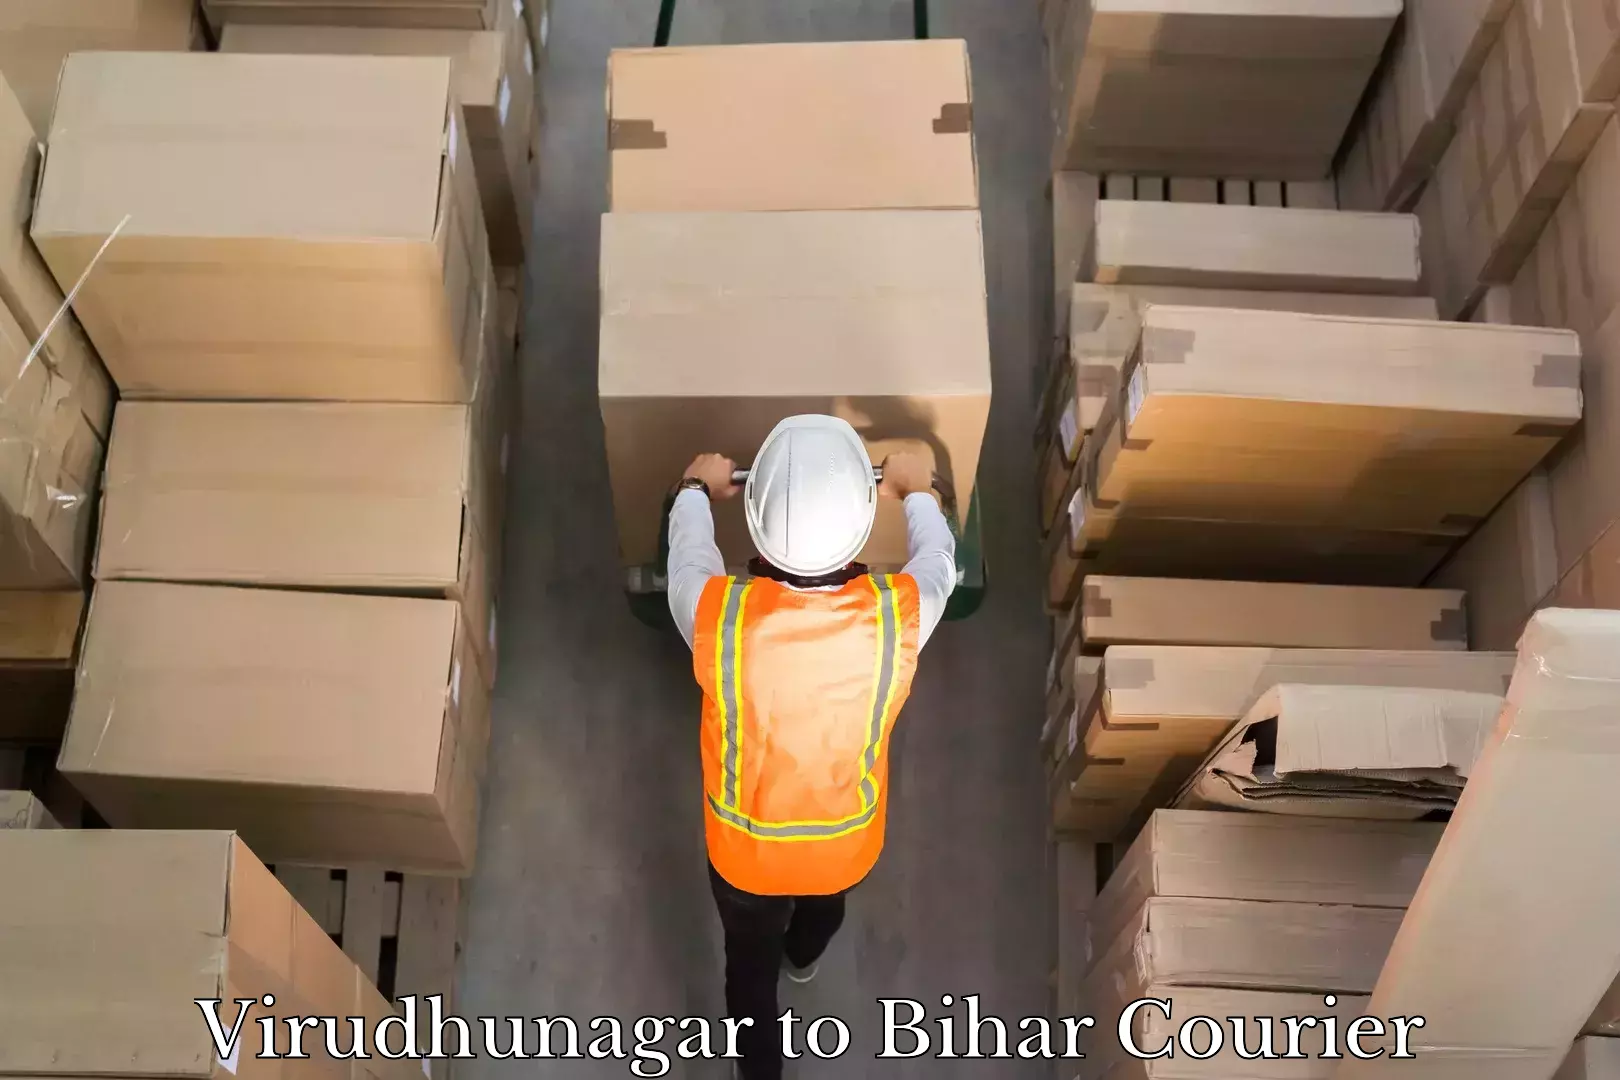 Professional courier handling Virudhunagar to Bihar